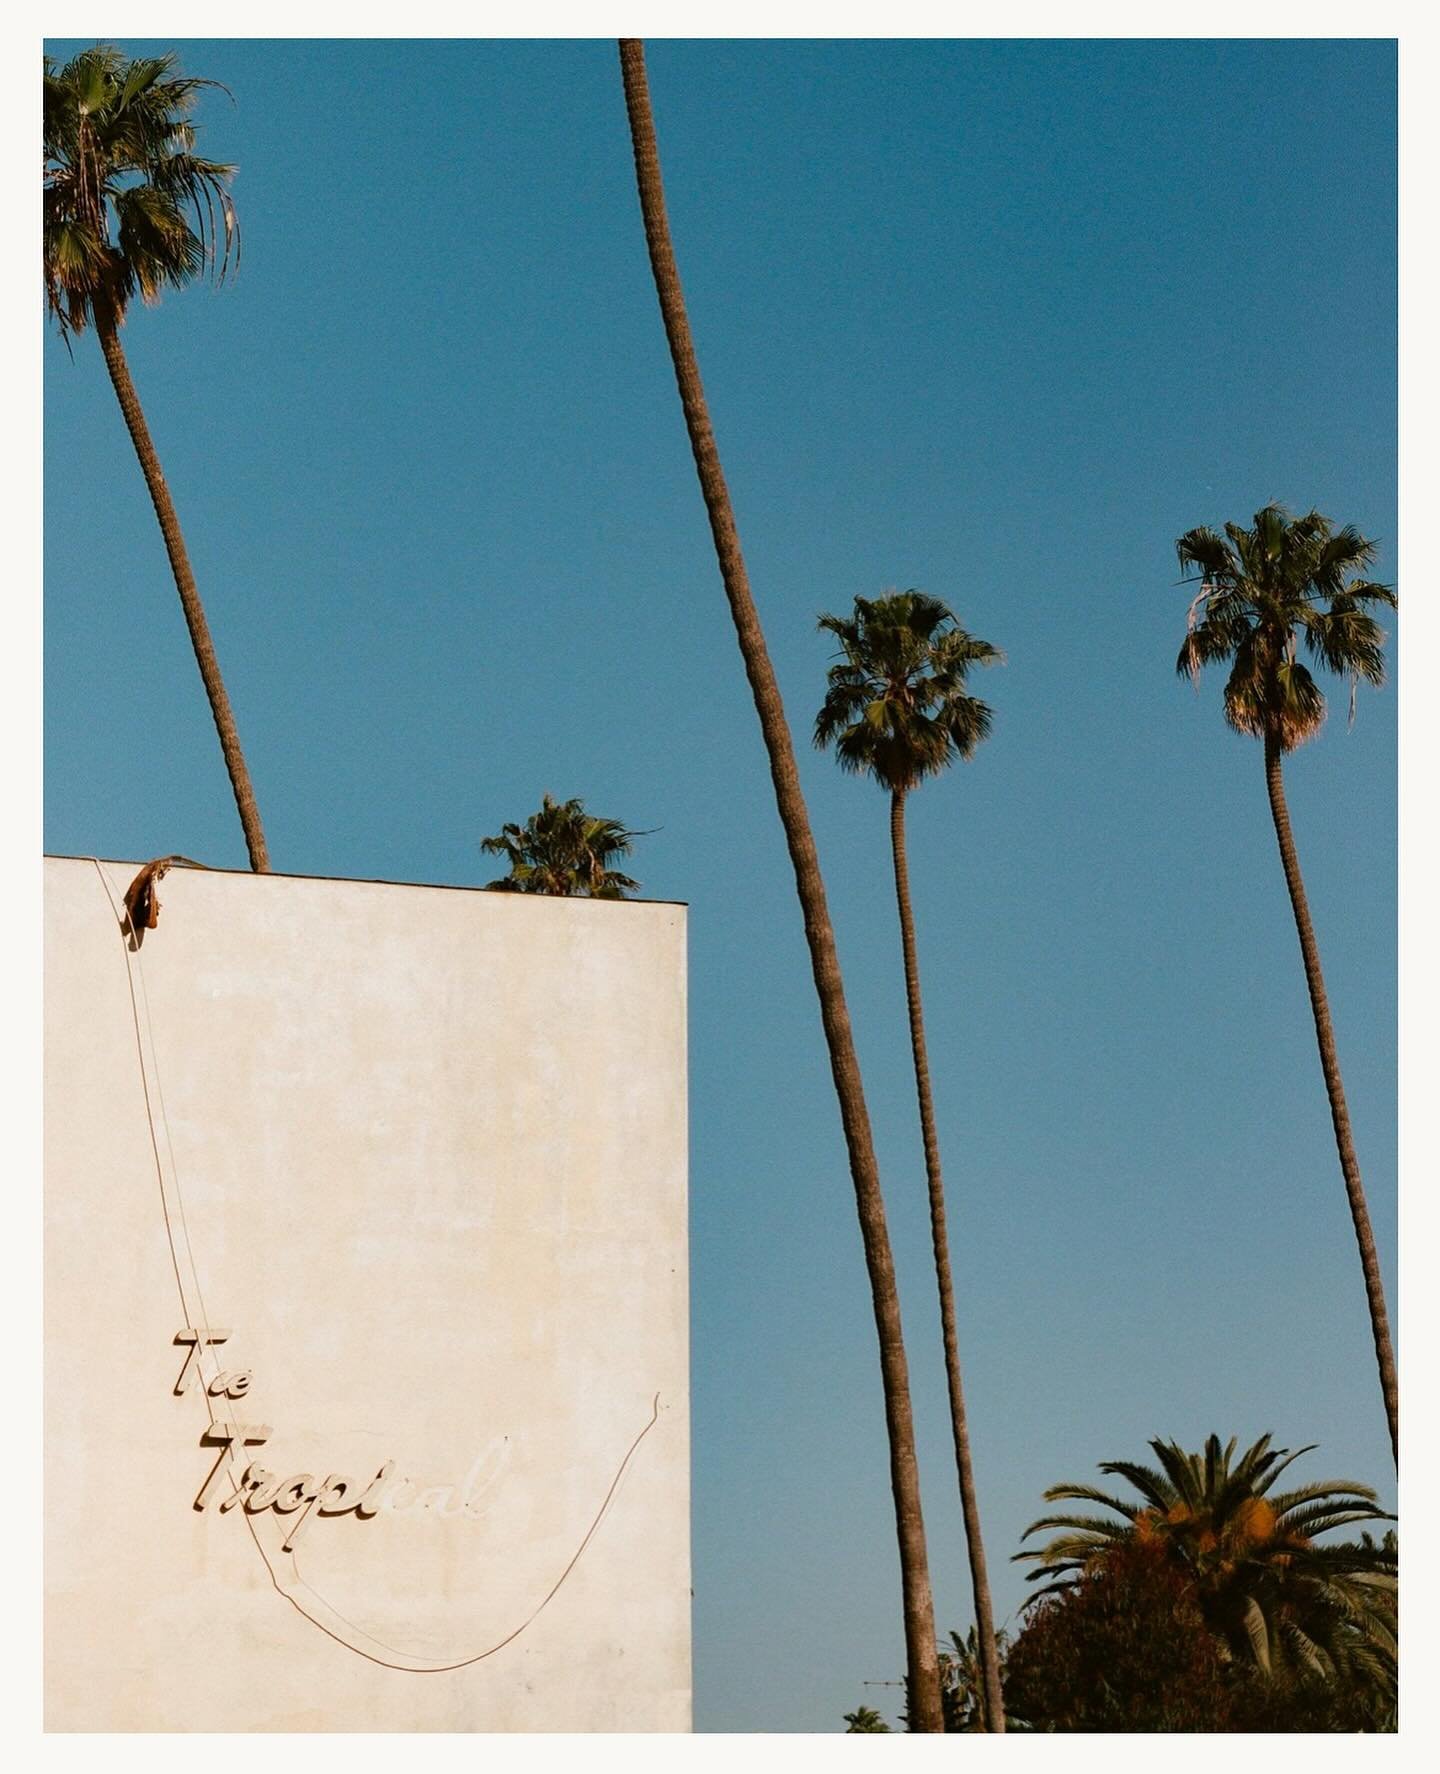 The Tropical &mdash; Los Angeles.

#film #kodak